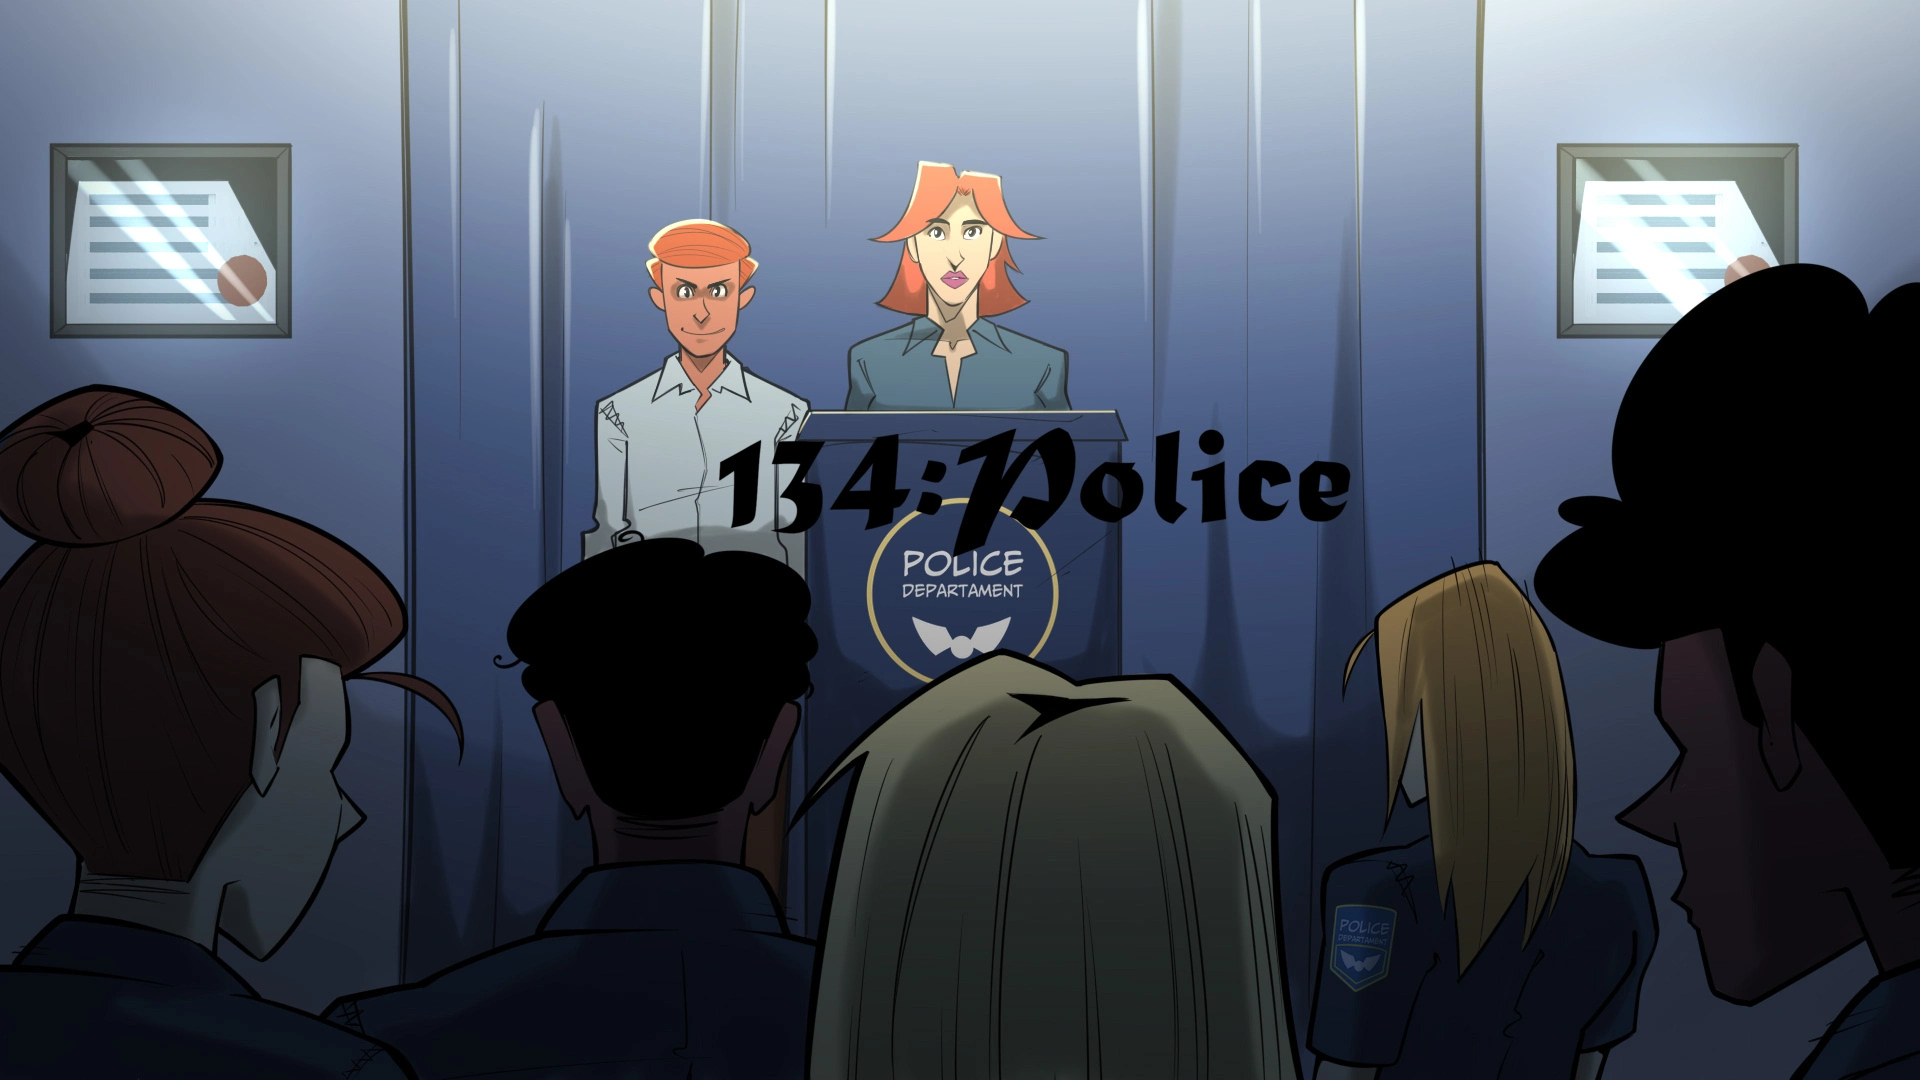 134:Police main image